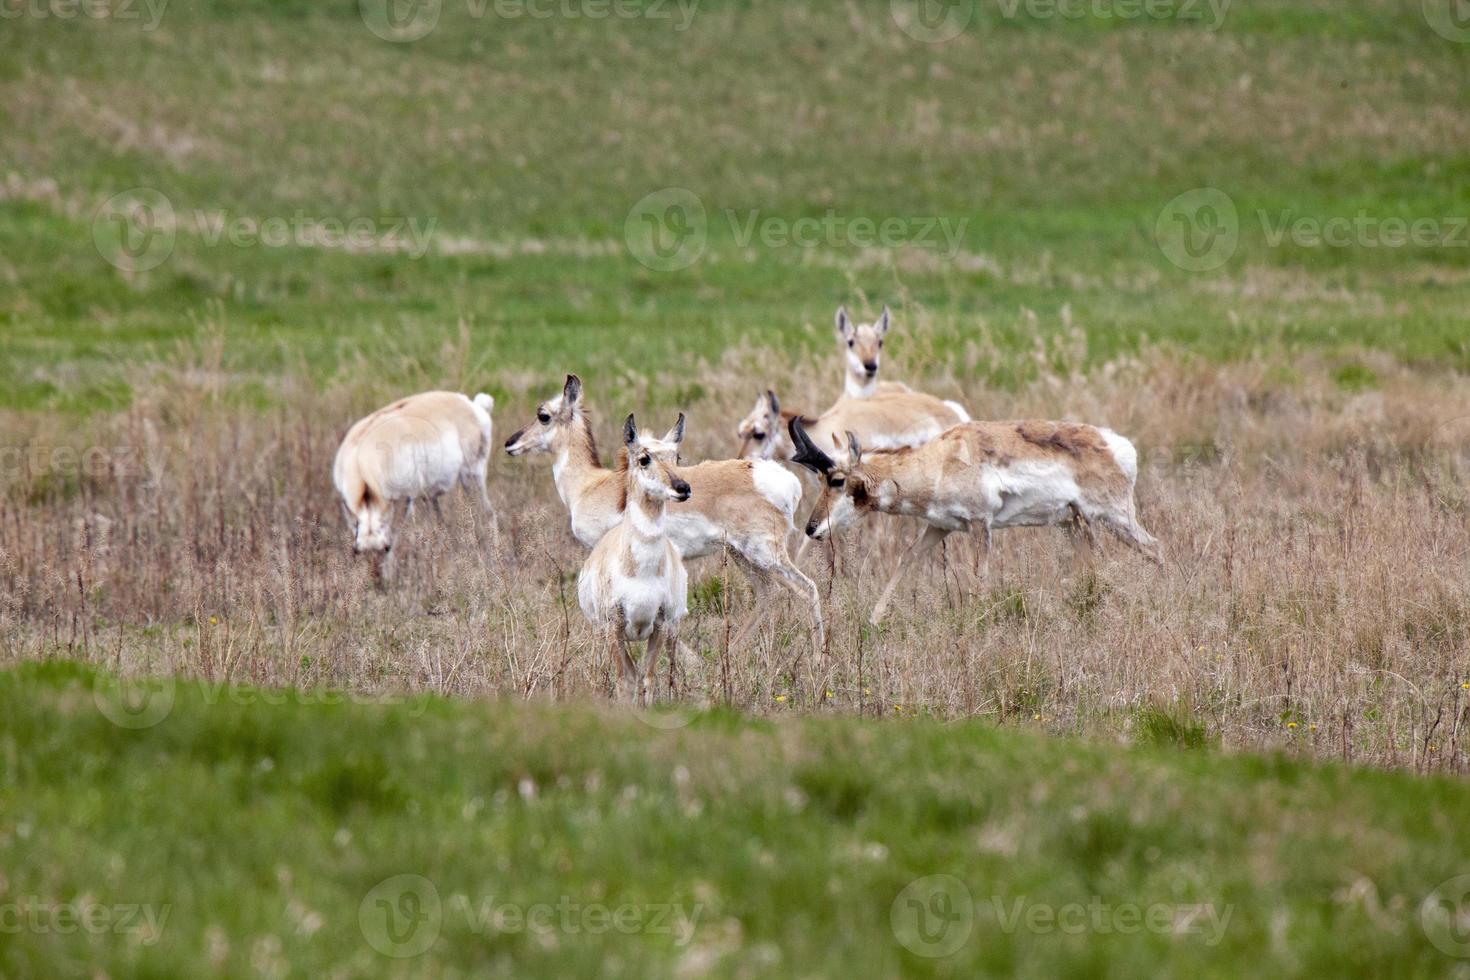 pronghorn antilope saskatchewan foto